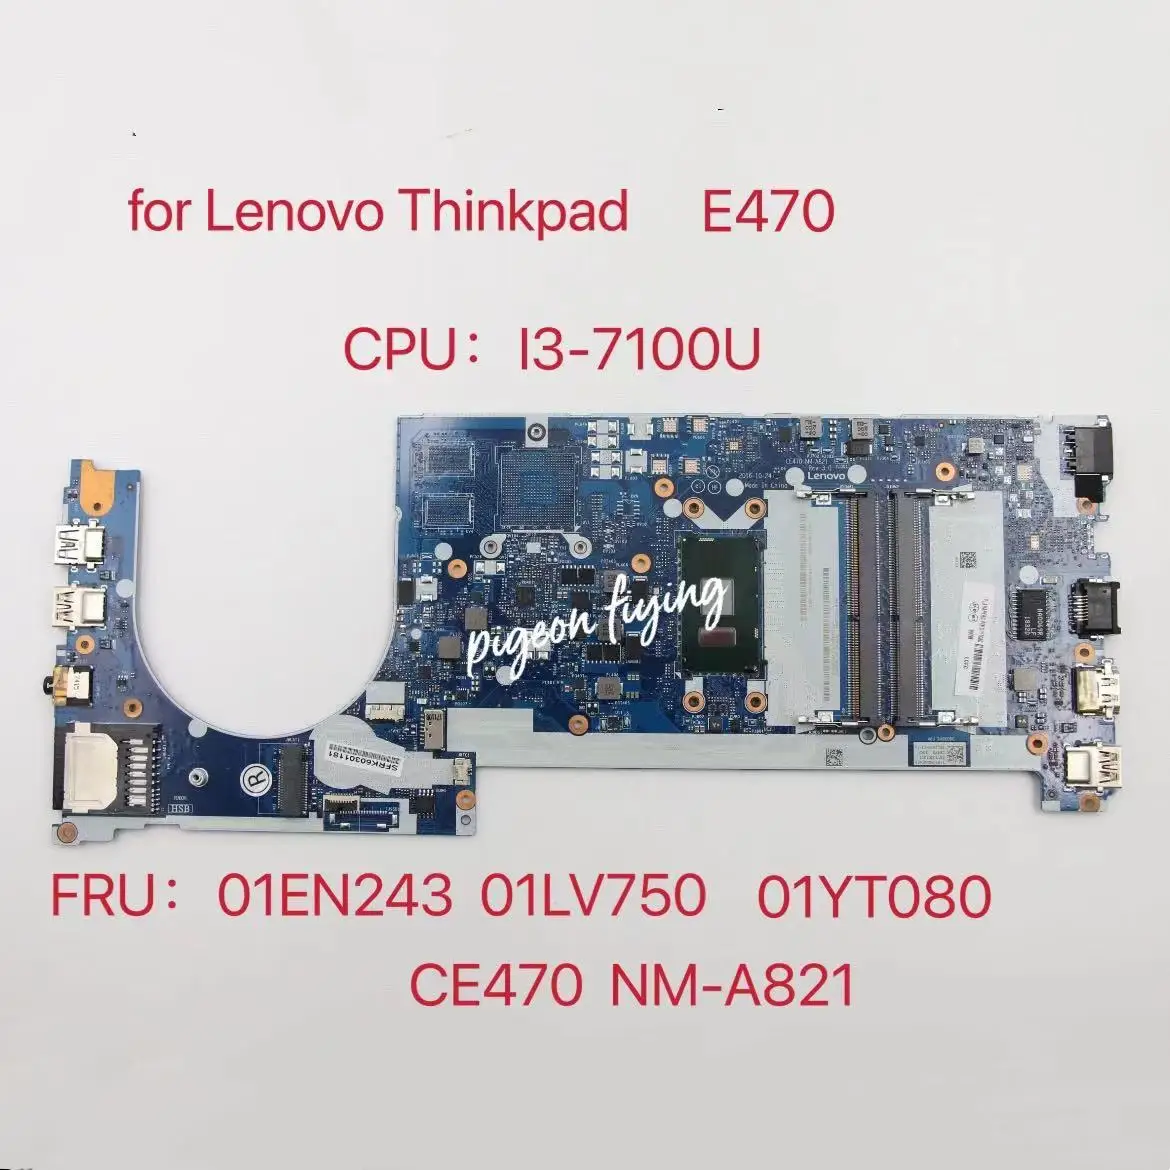 за Lenvov Thinkpad E470 E470C дънна Платка на лаптоп ПРОЦЕСОР: I3-7100U UAM CE470 NM-A821 100% Тест ок